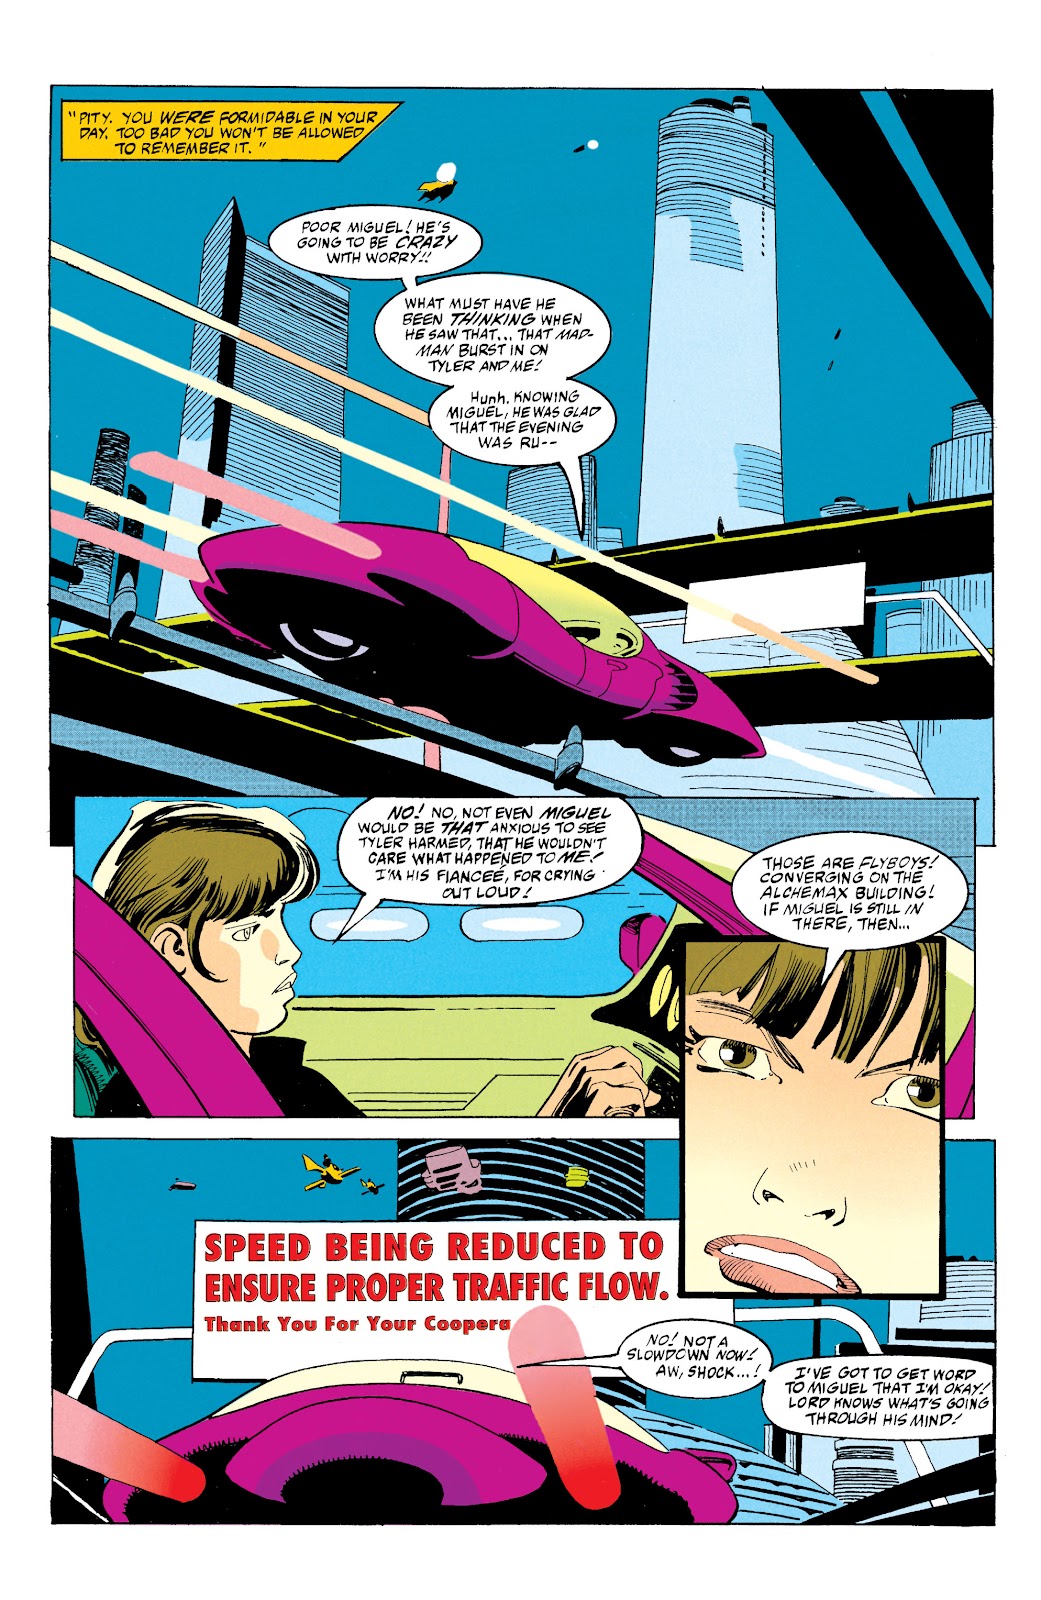 Spider-Man 2099 (1992) issue 13 - Page 5